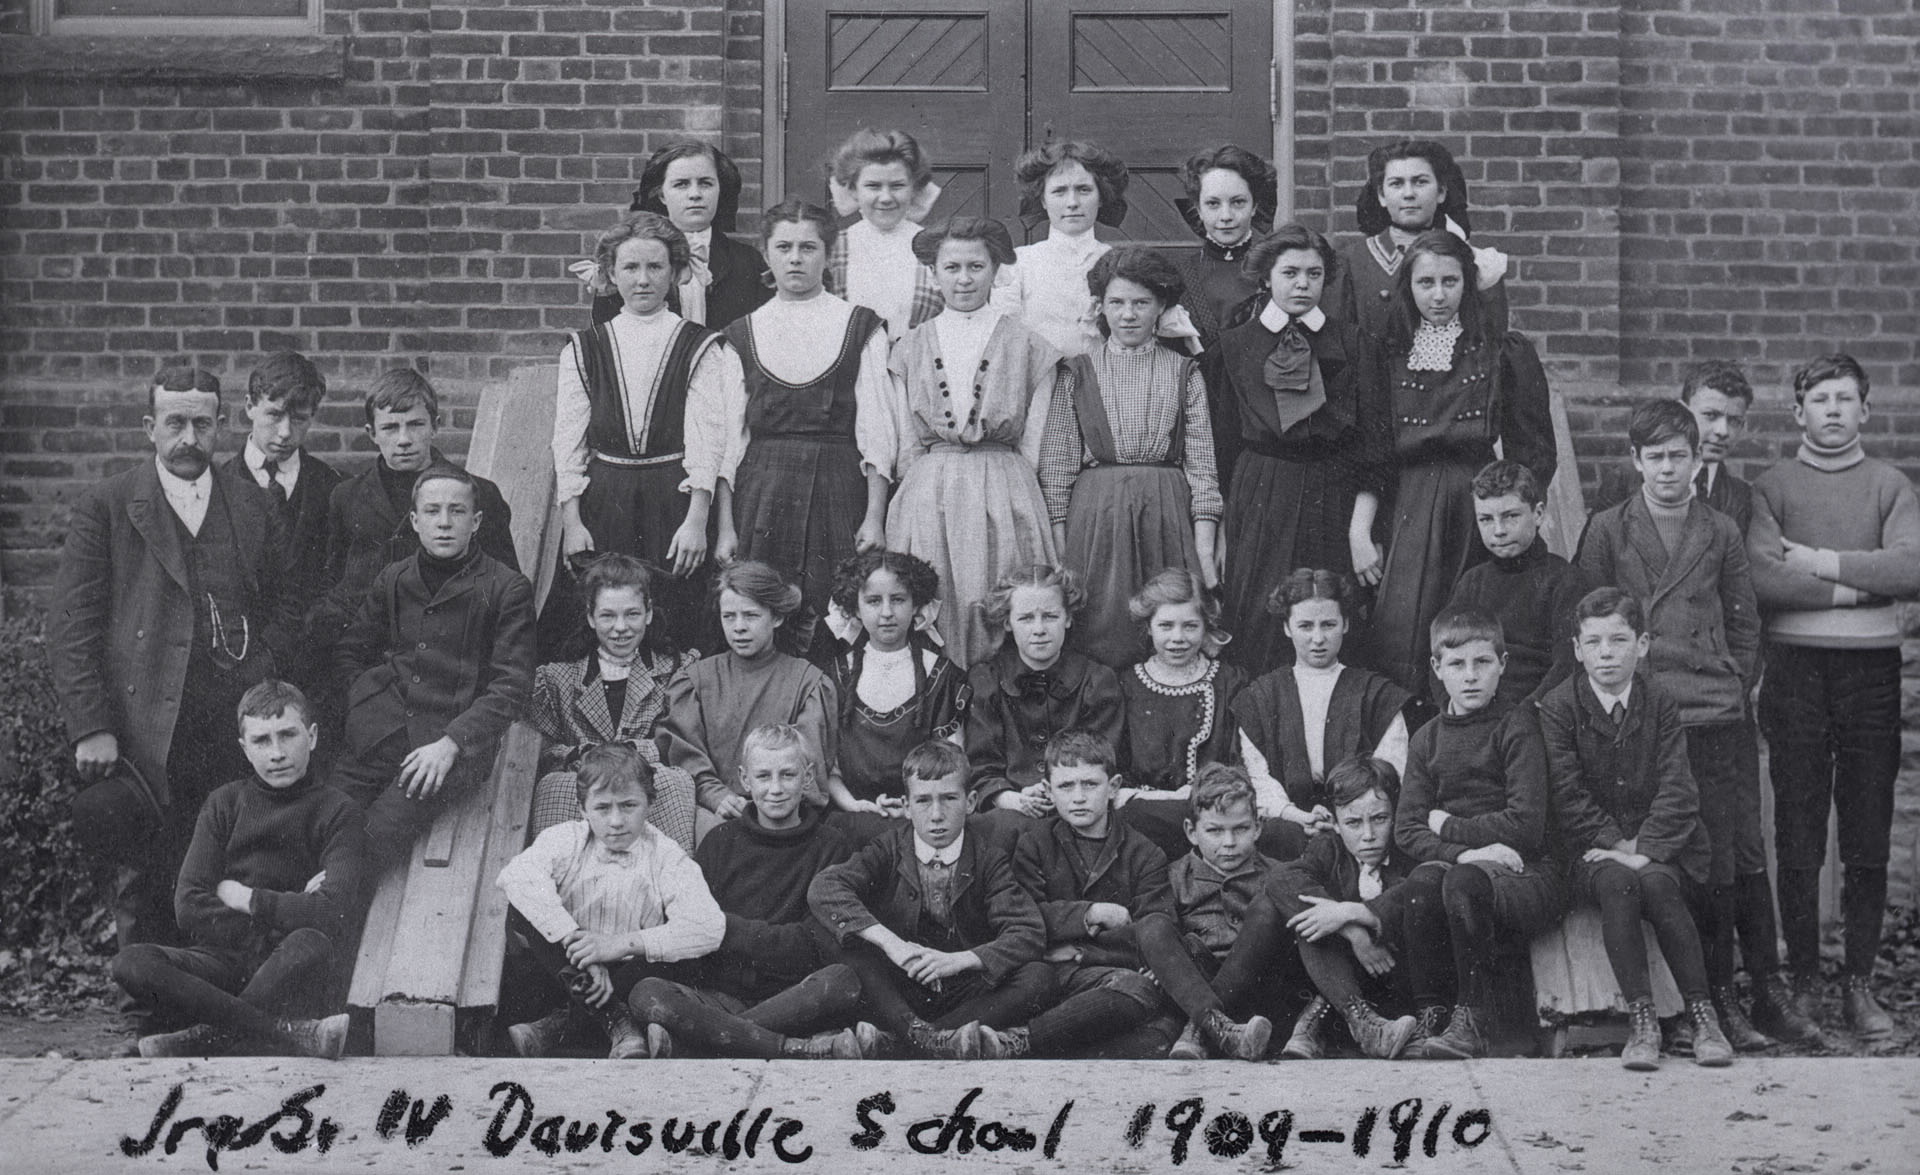 Class photo from Davisville School 1909-1910